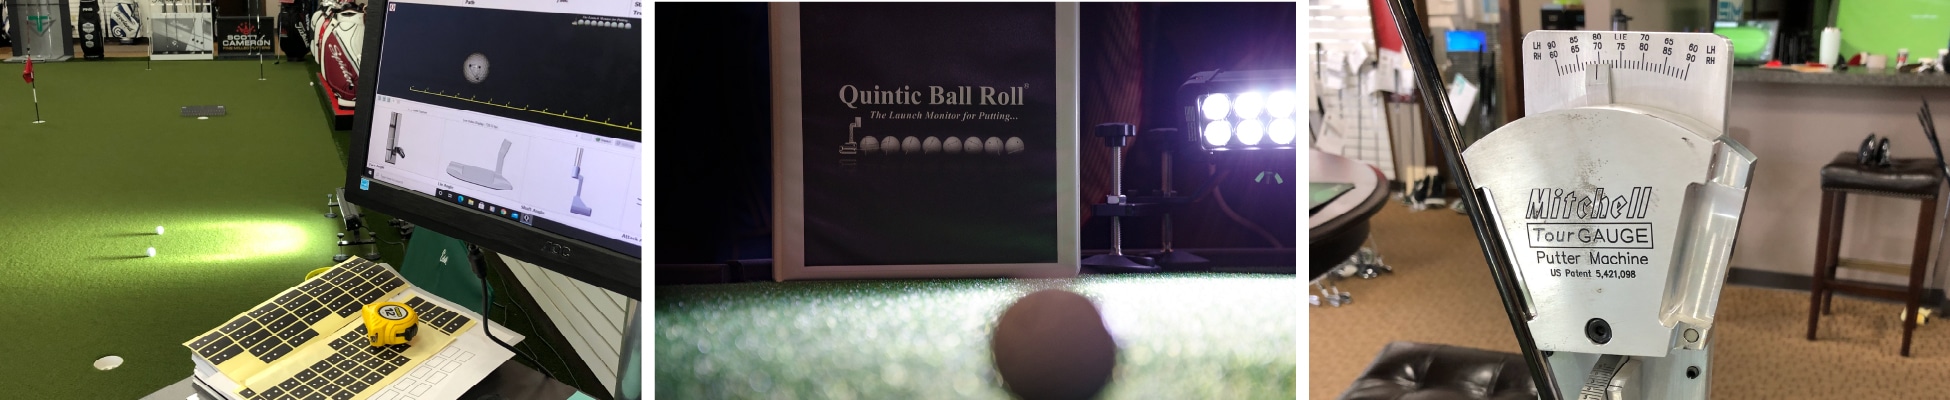 QuinticBall IA - Quintic Ball Roll - Sticks 96 Golf